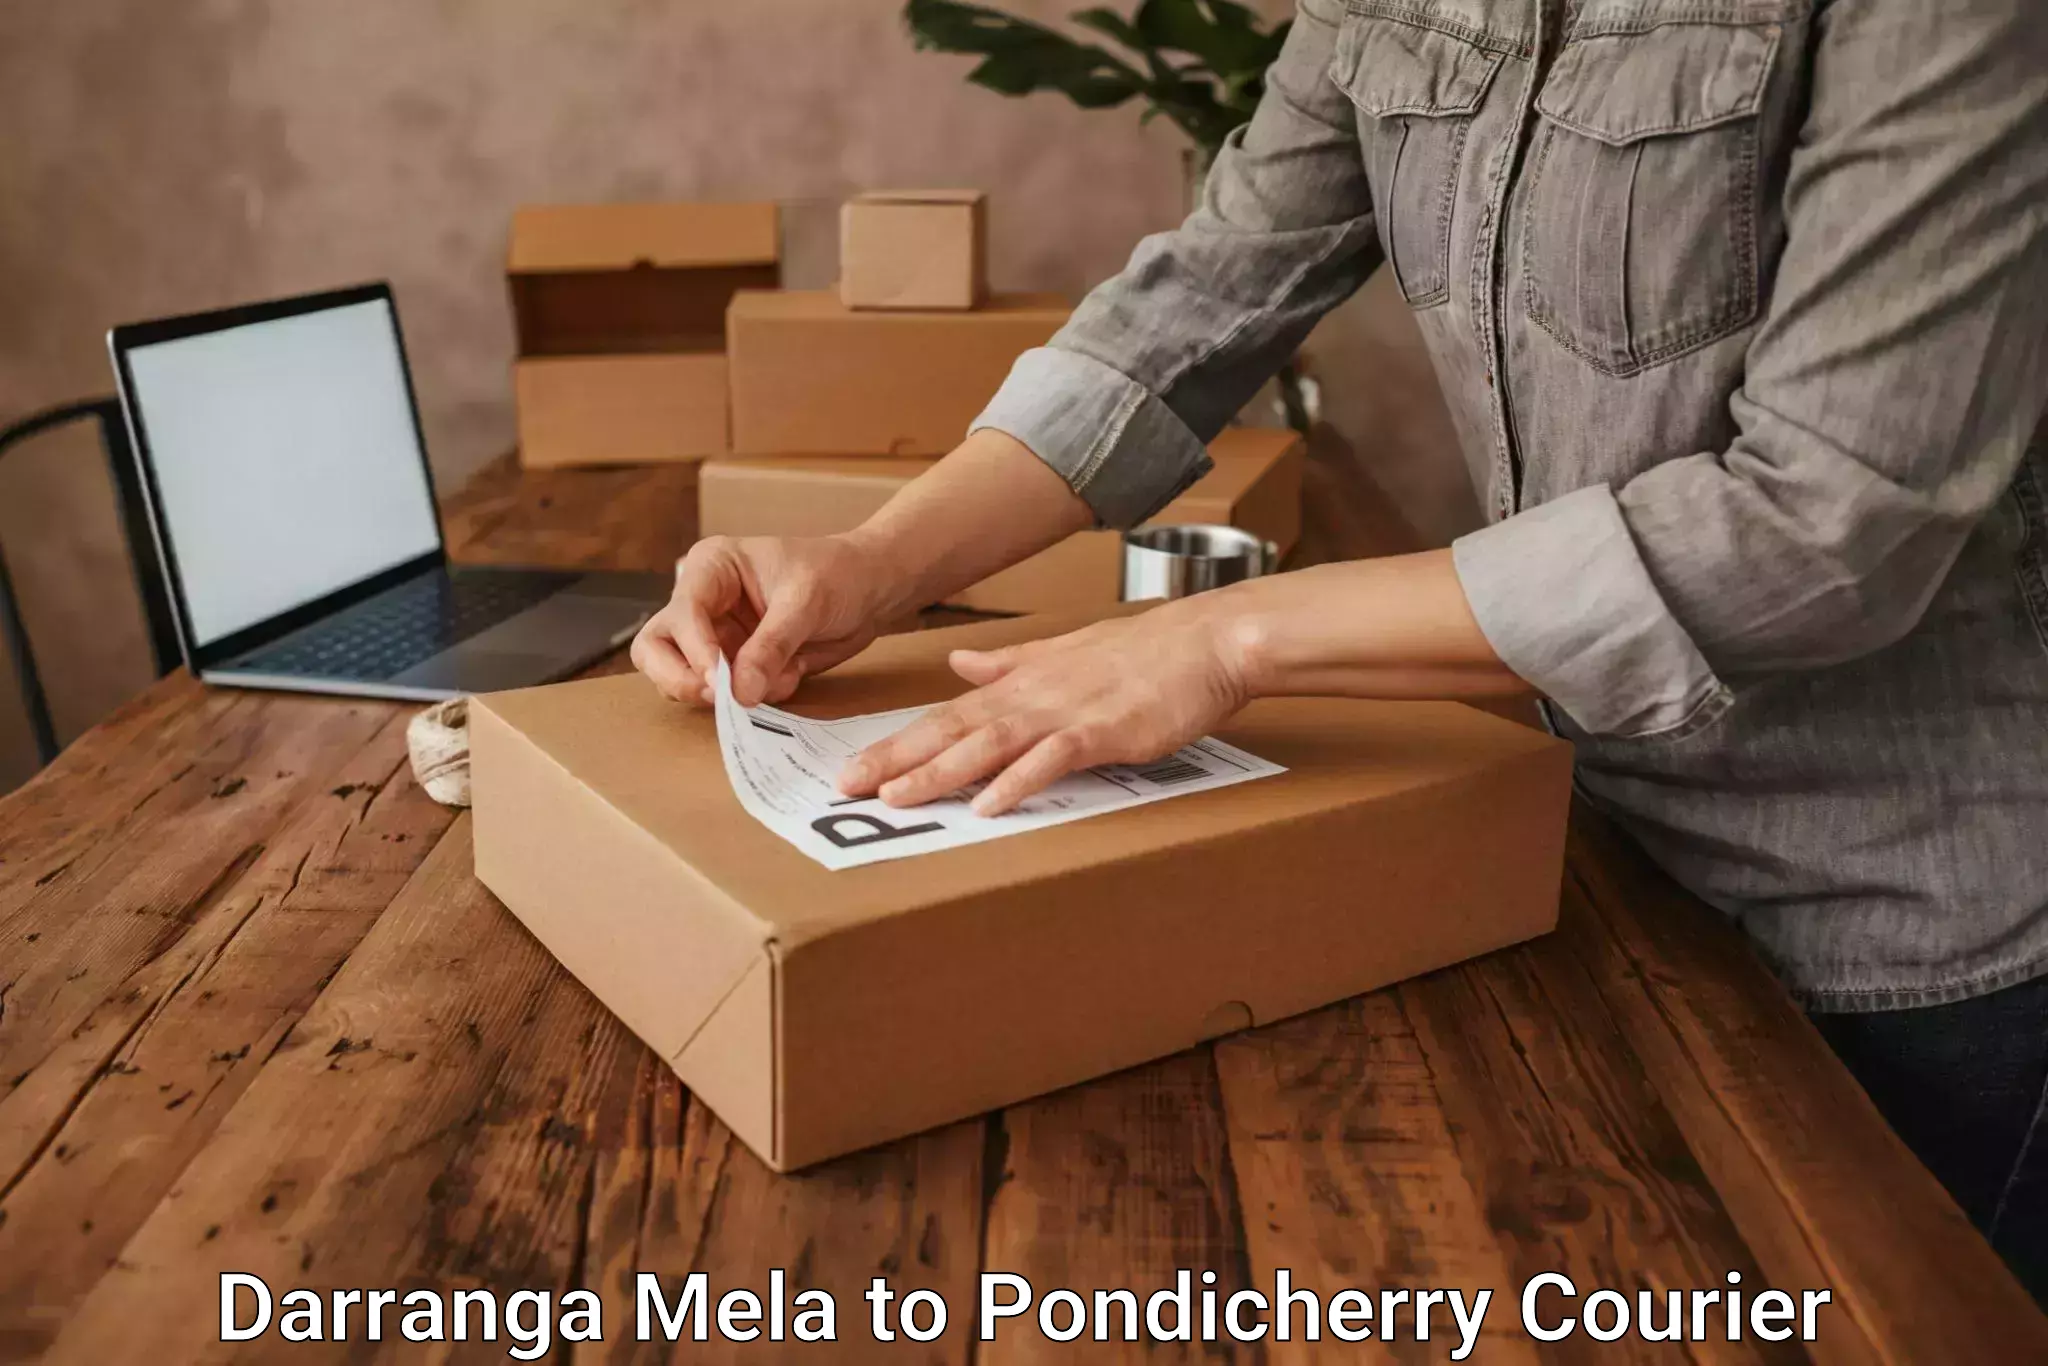 Express mail solutions Darranga Mela to Pondicherry University